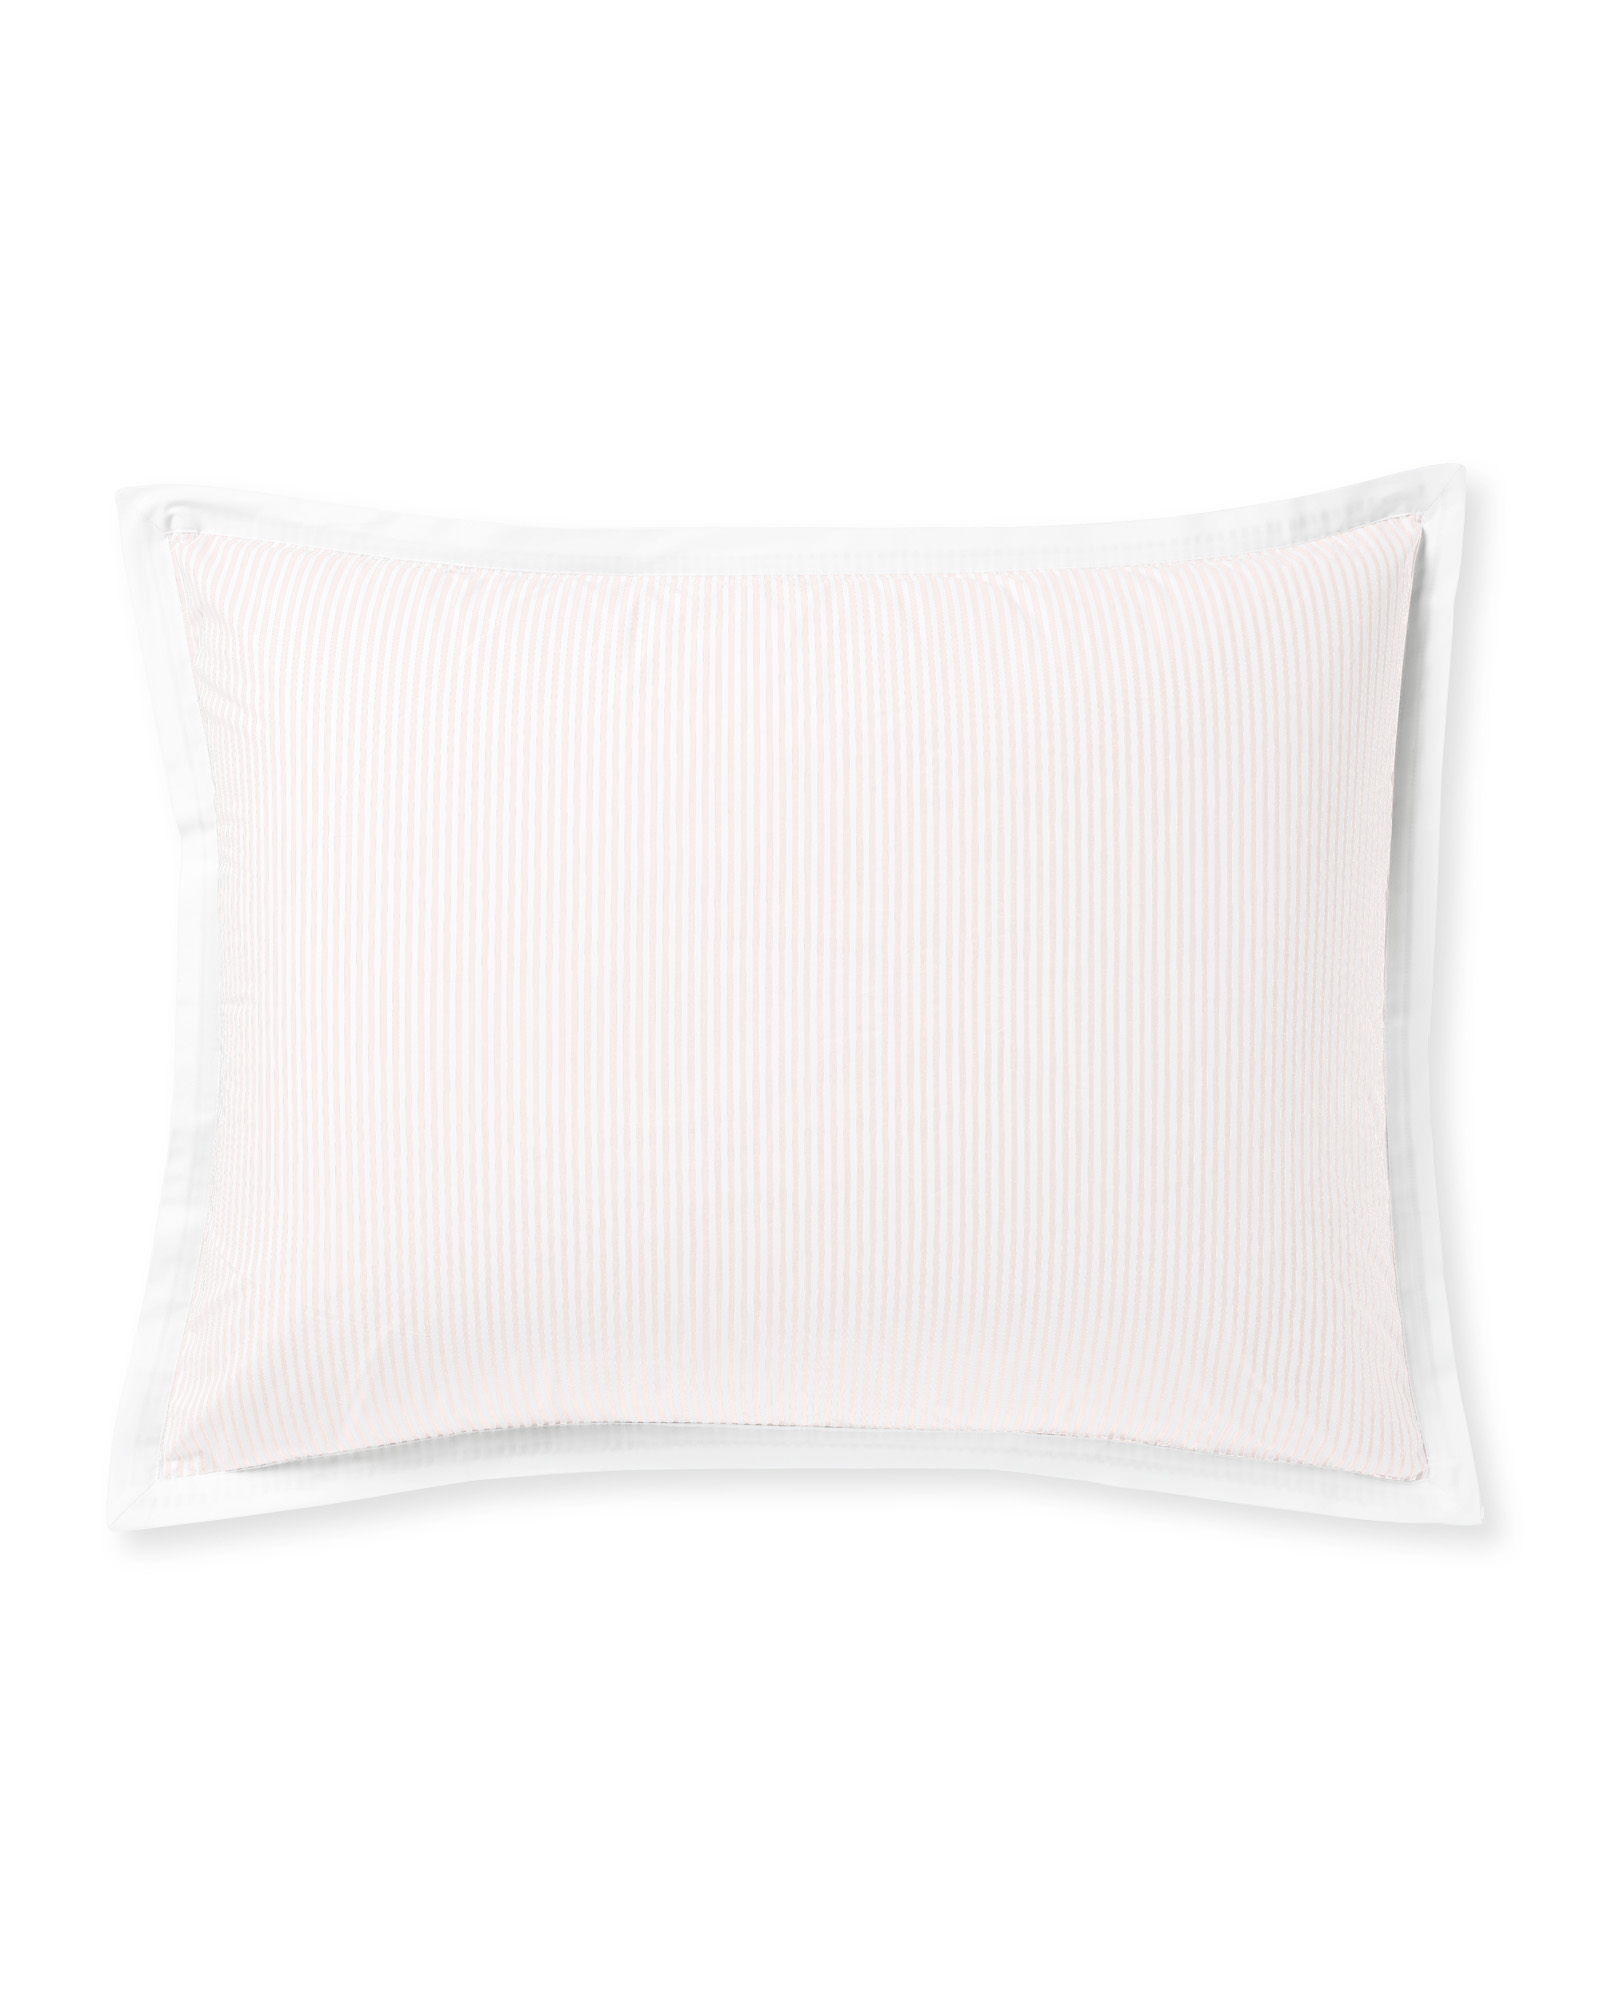 Oxford Stripe Standard Sham - Pink Sand - Insert sold separately - Image 0